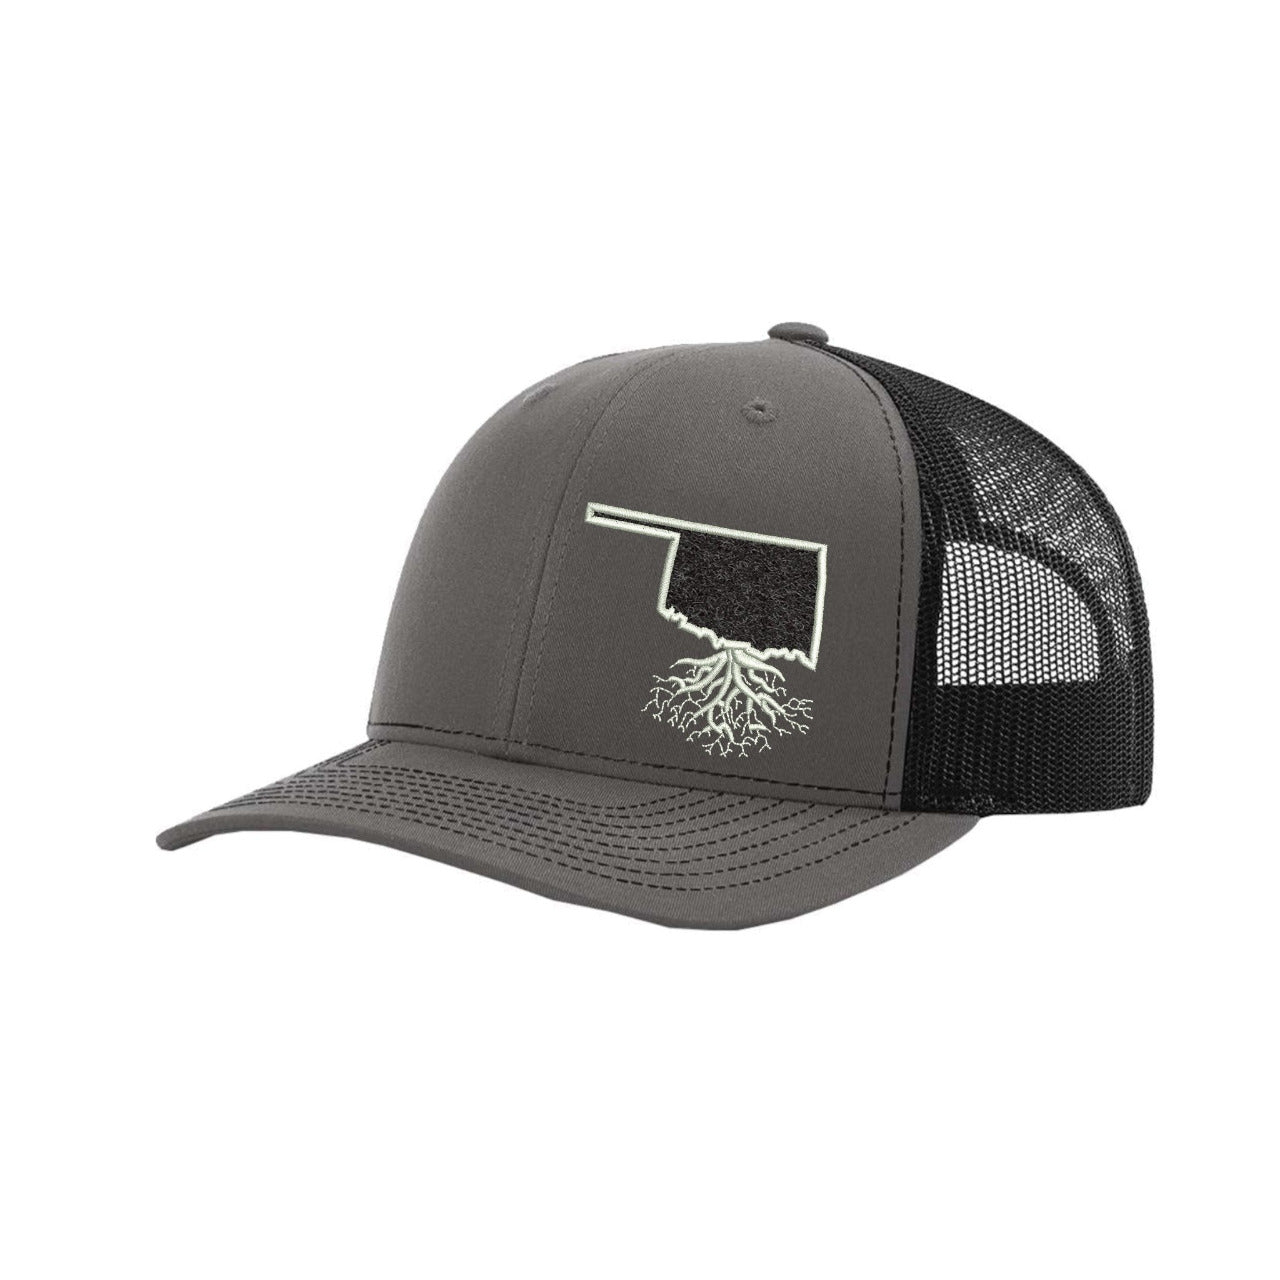 Oklahoma Hook & Loop Trucker Cap - Hats